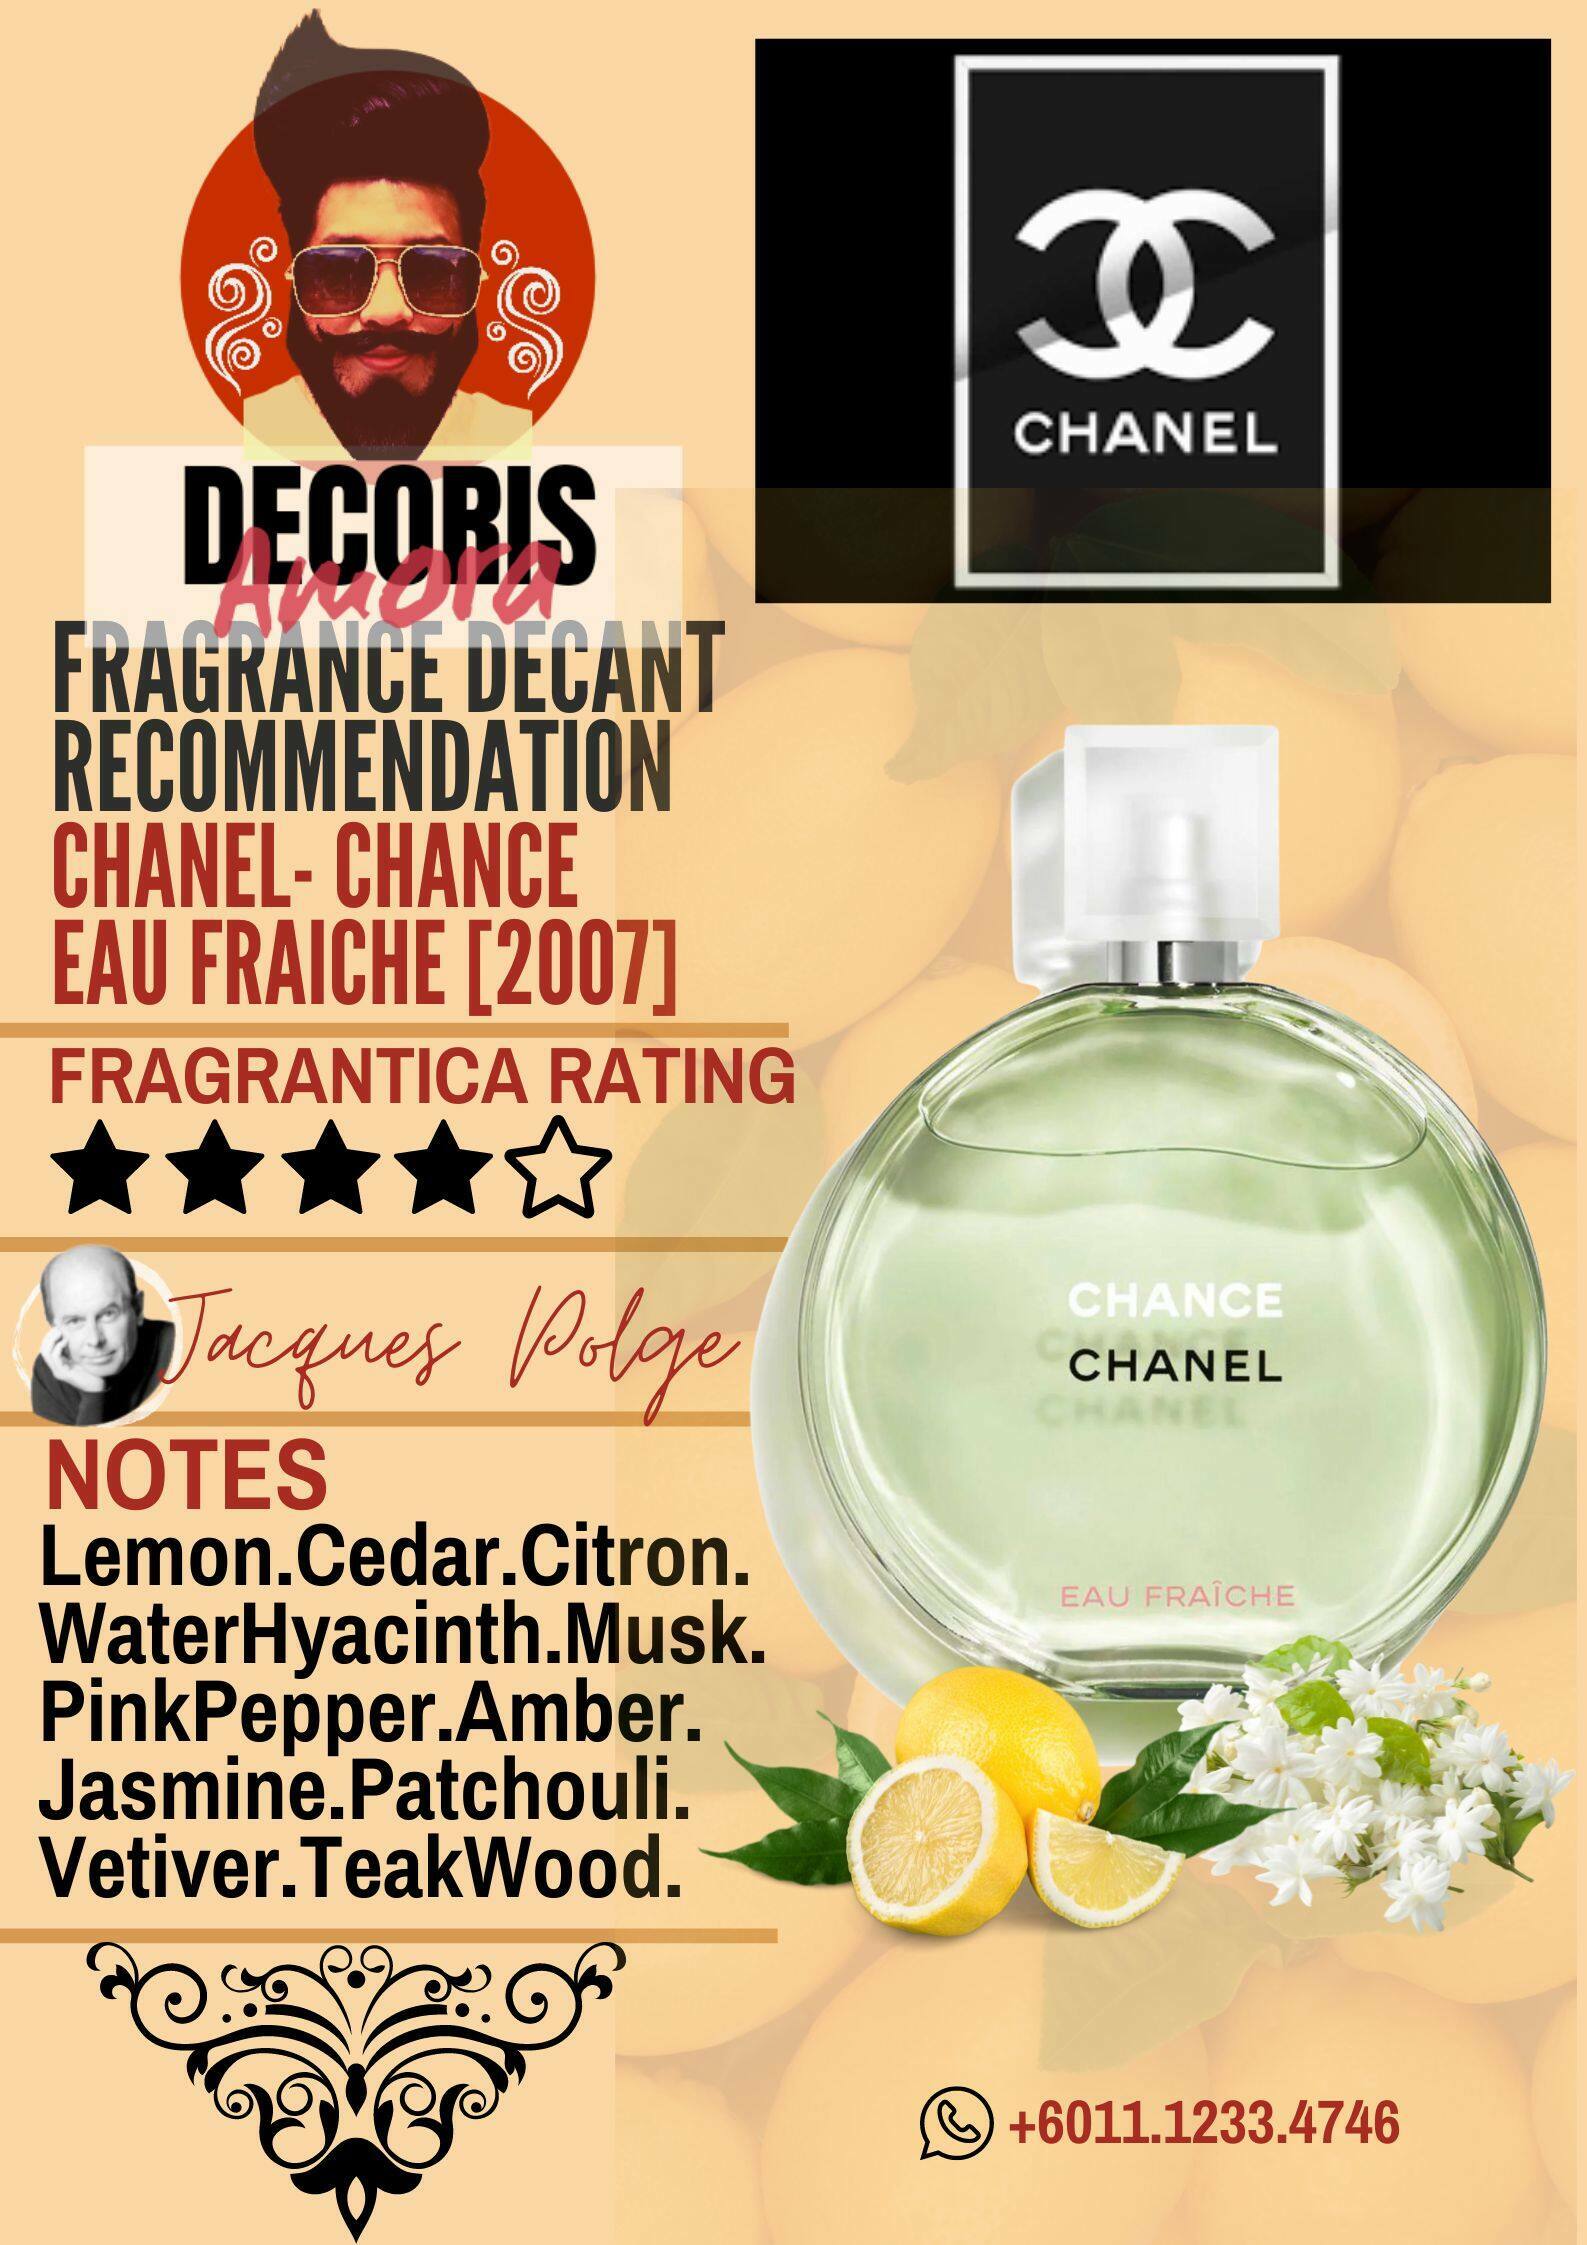 Chanel Chance Eau Fraiche- Perfume Decant – Decoris Amora Perfume Decant